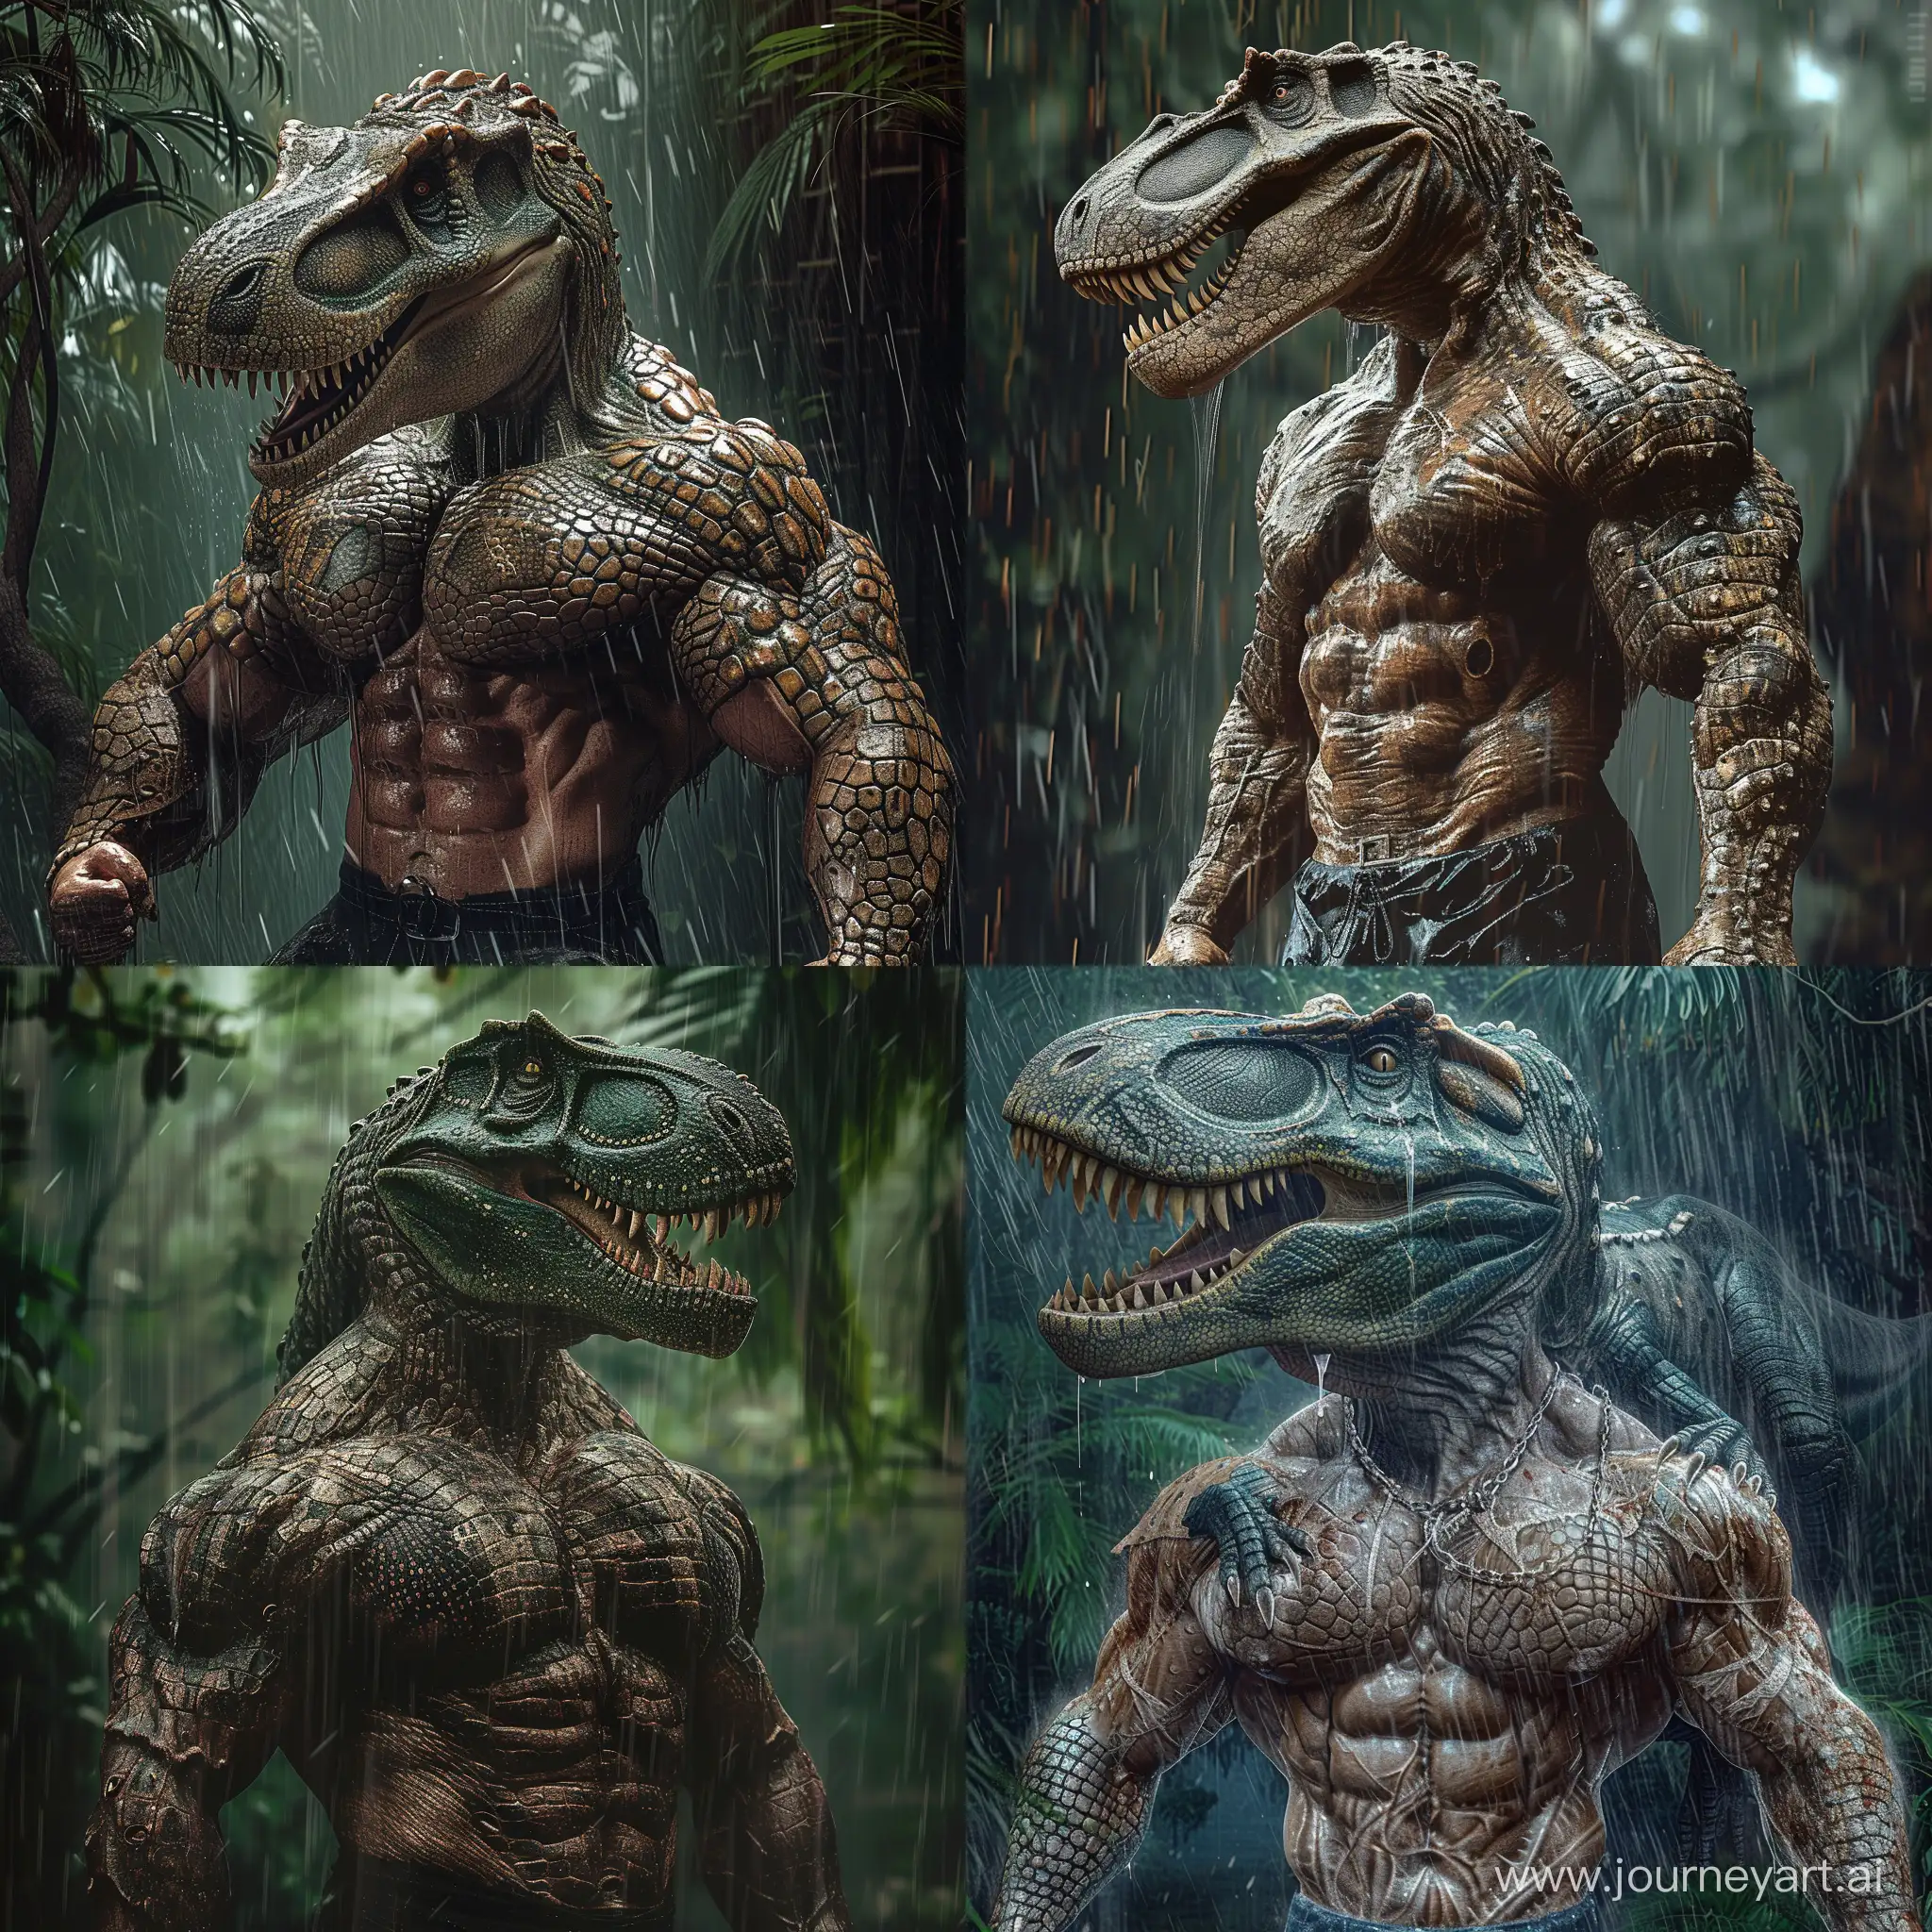 Cinematic-Jungle-Encounter-Bodybuilder-with-Alligator-Skin-and-TRex-Head-in-a-Spooky-Rainy-Scene